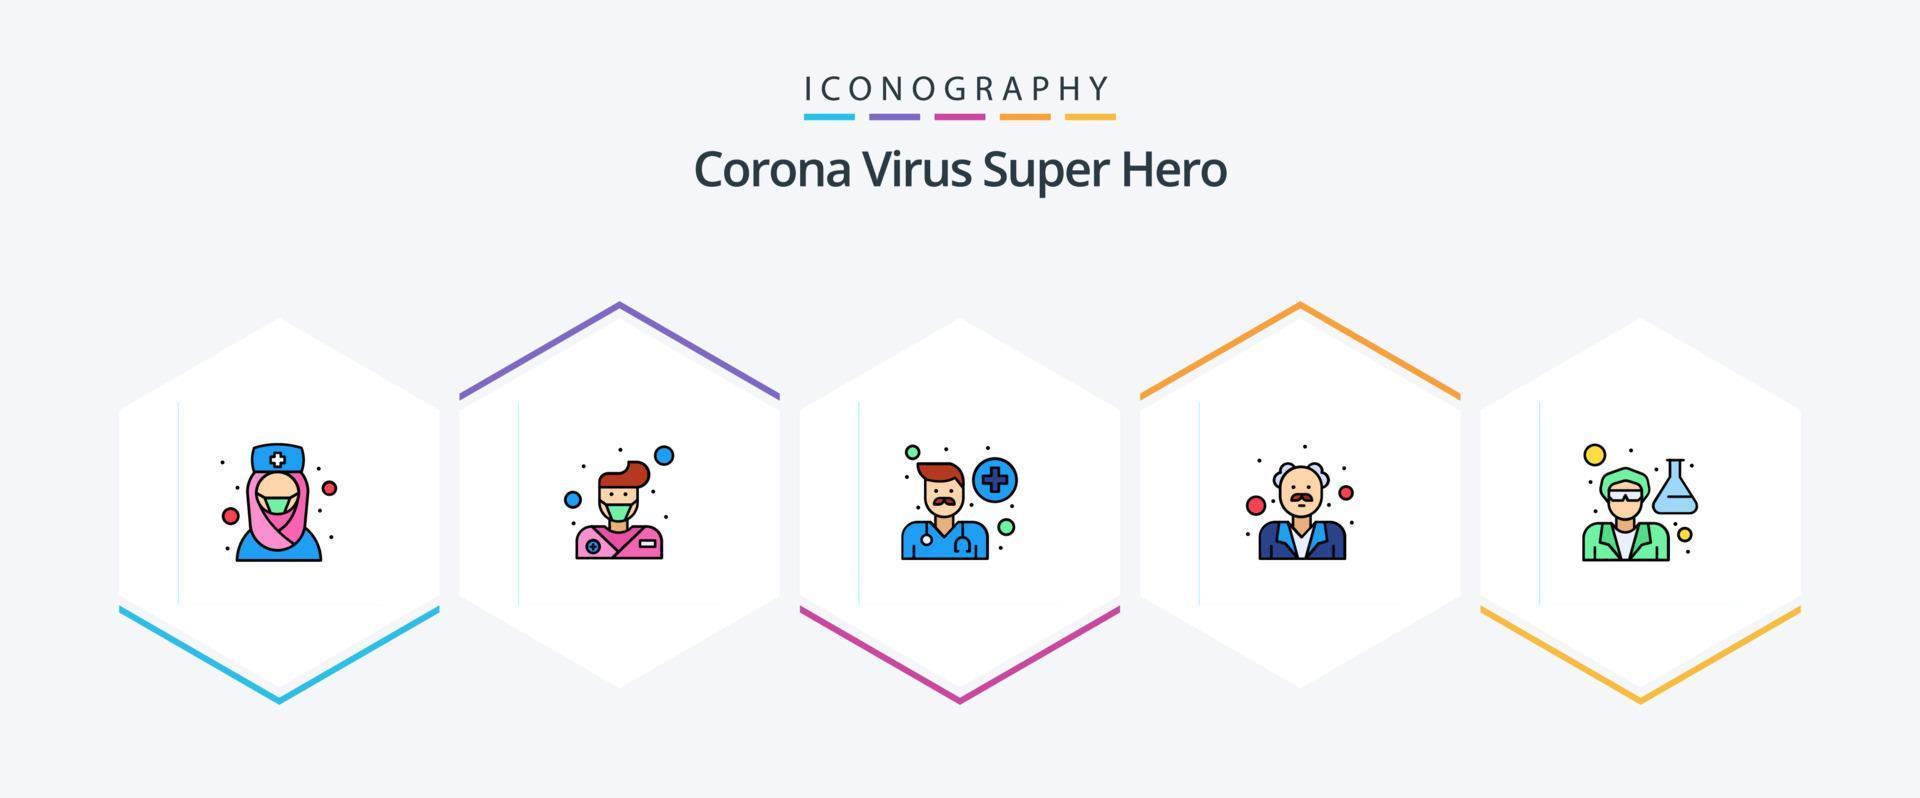 virus corona super héros 25 pack d'icônes fillline comprenant un médecin. humain. avatar. médecin. senior vecteur